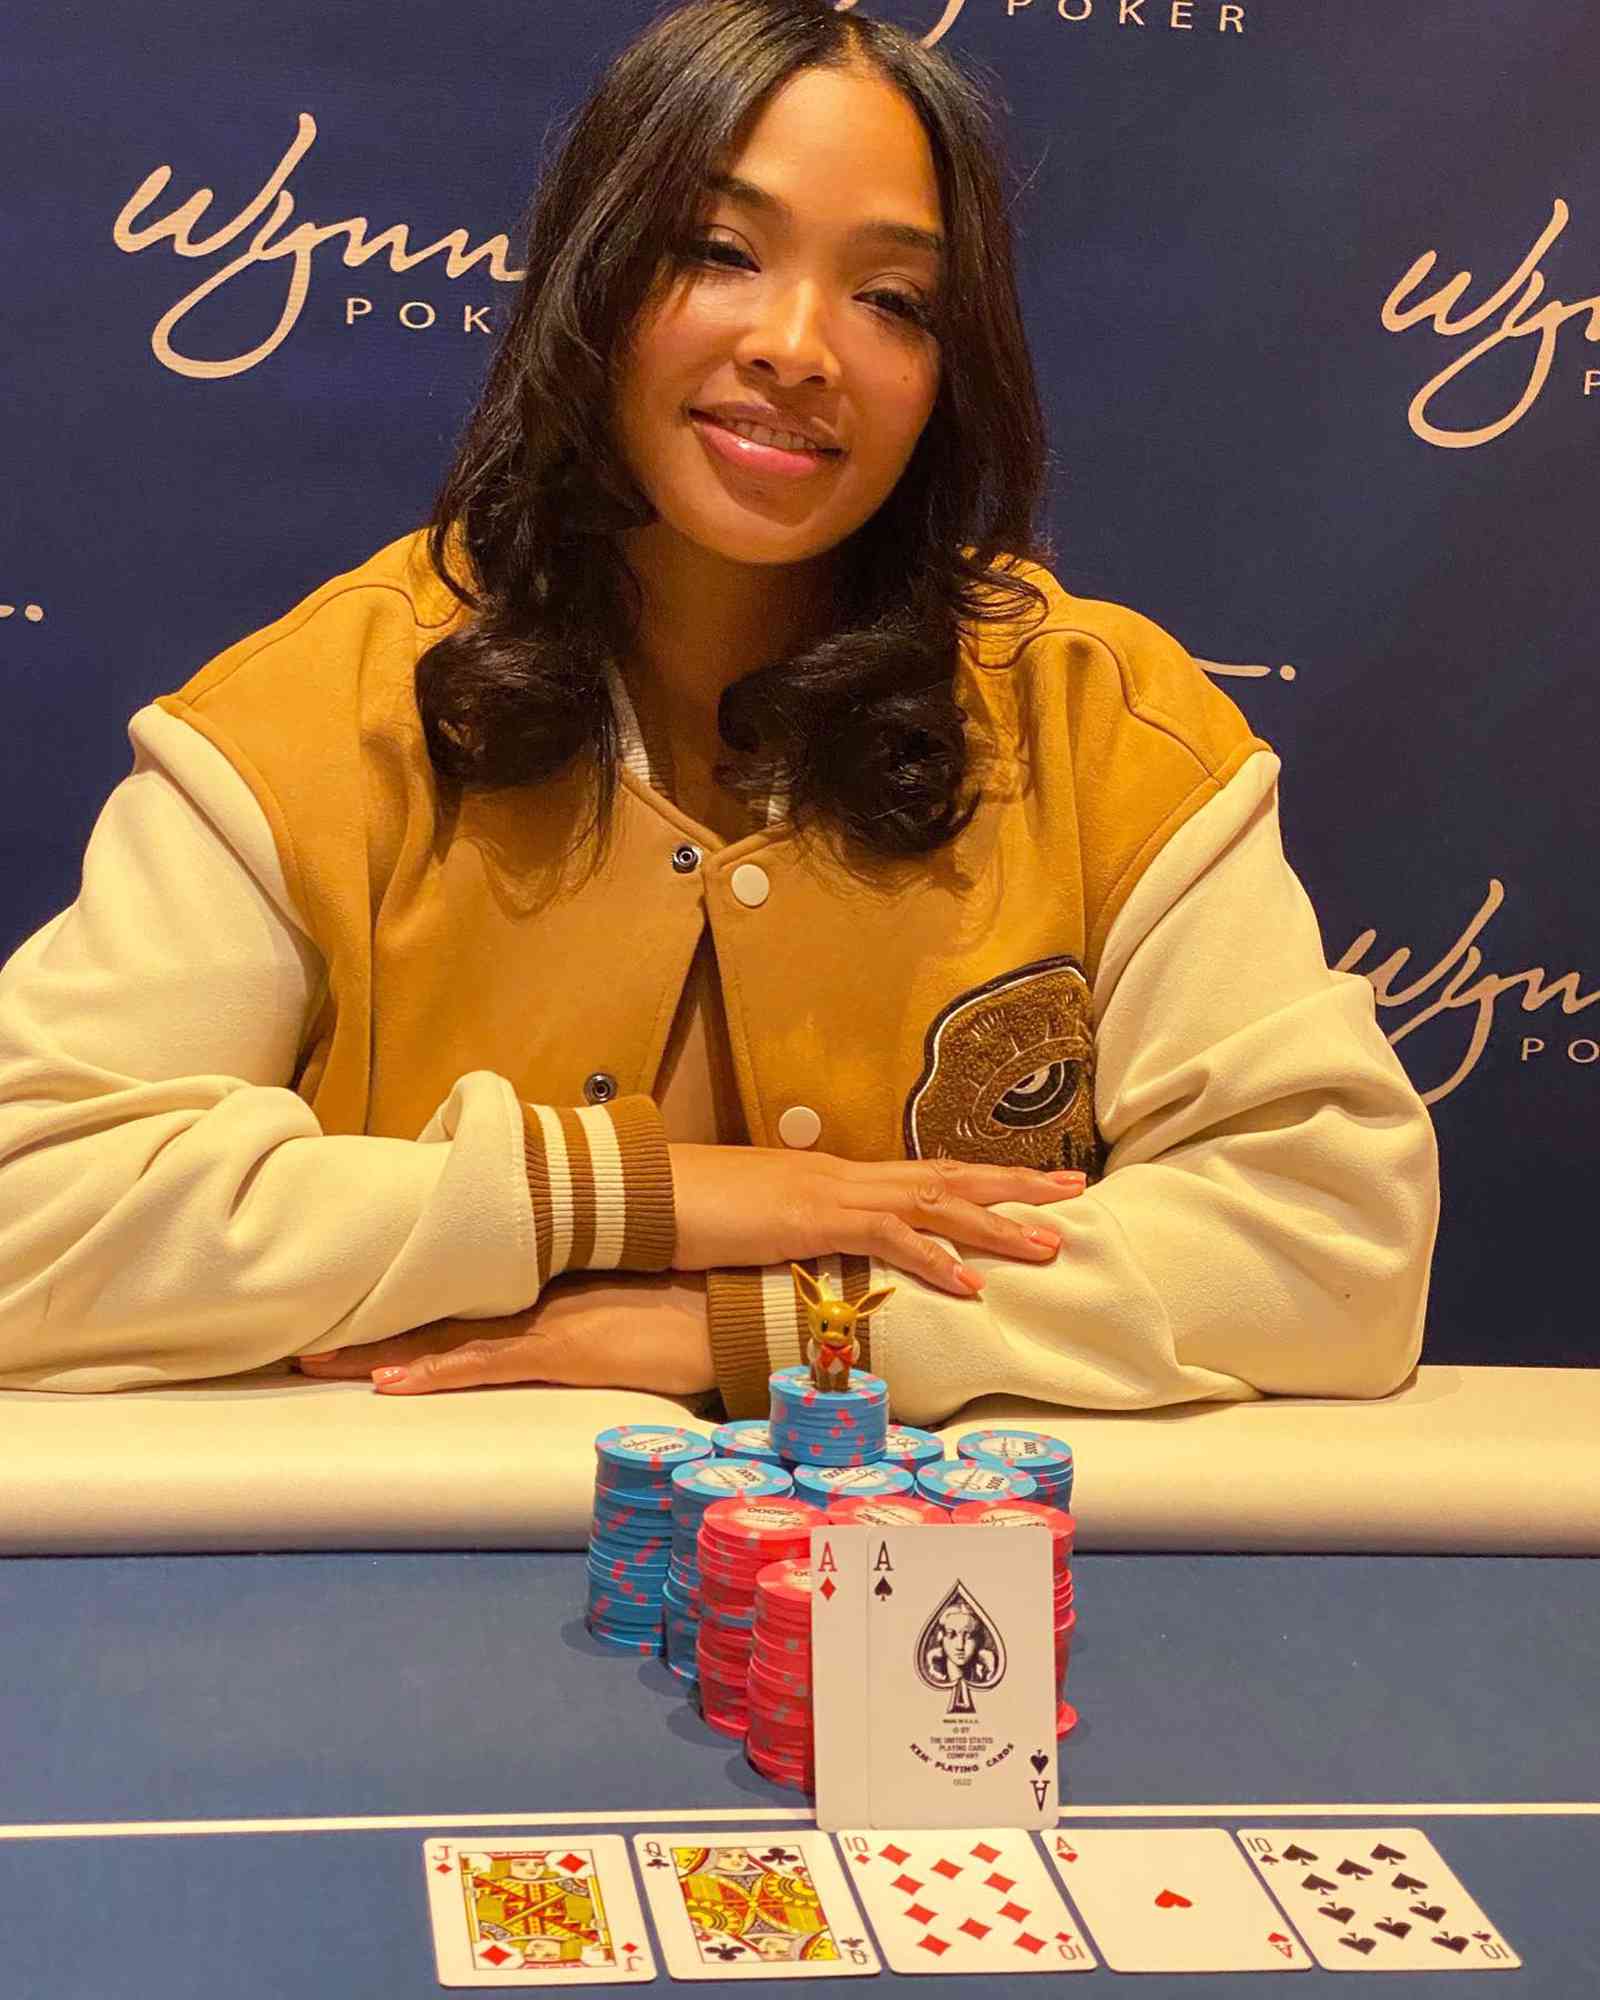 Princess Love at a poker tournament at the WYNN in Las Vegas.